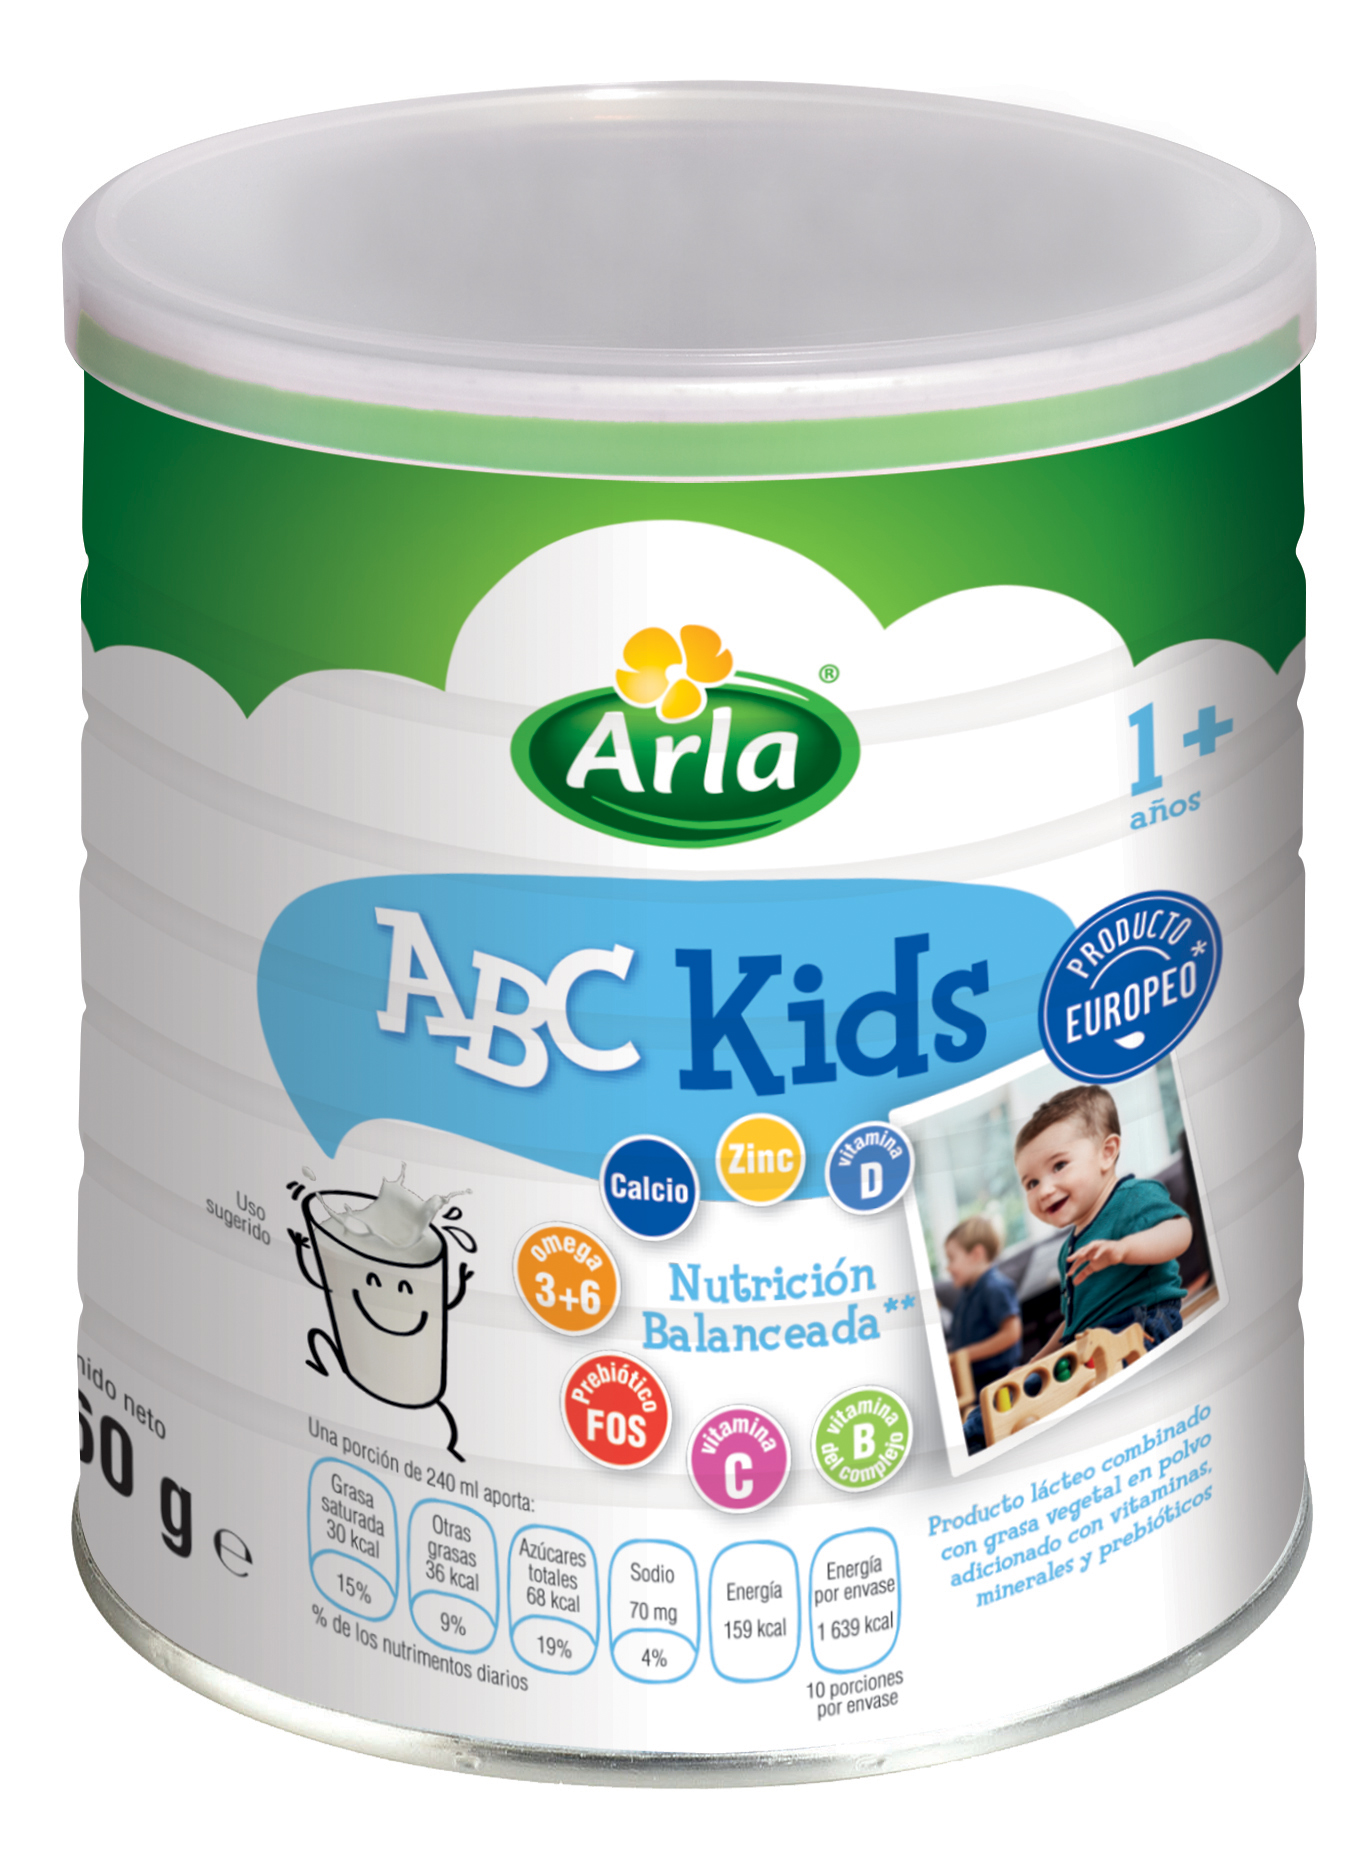 Arla ABC Kids® ABC Kids Lata 360g